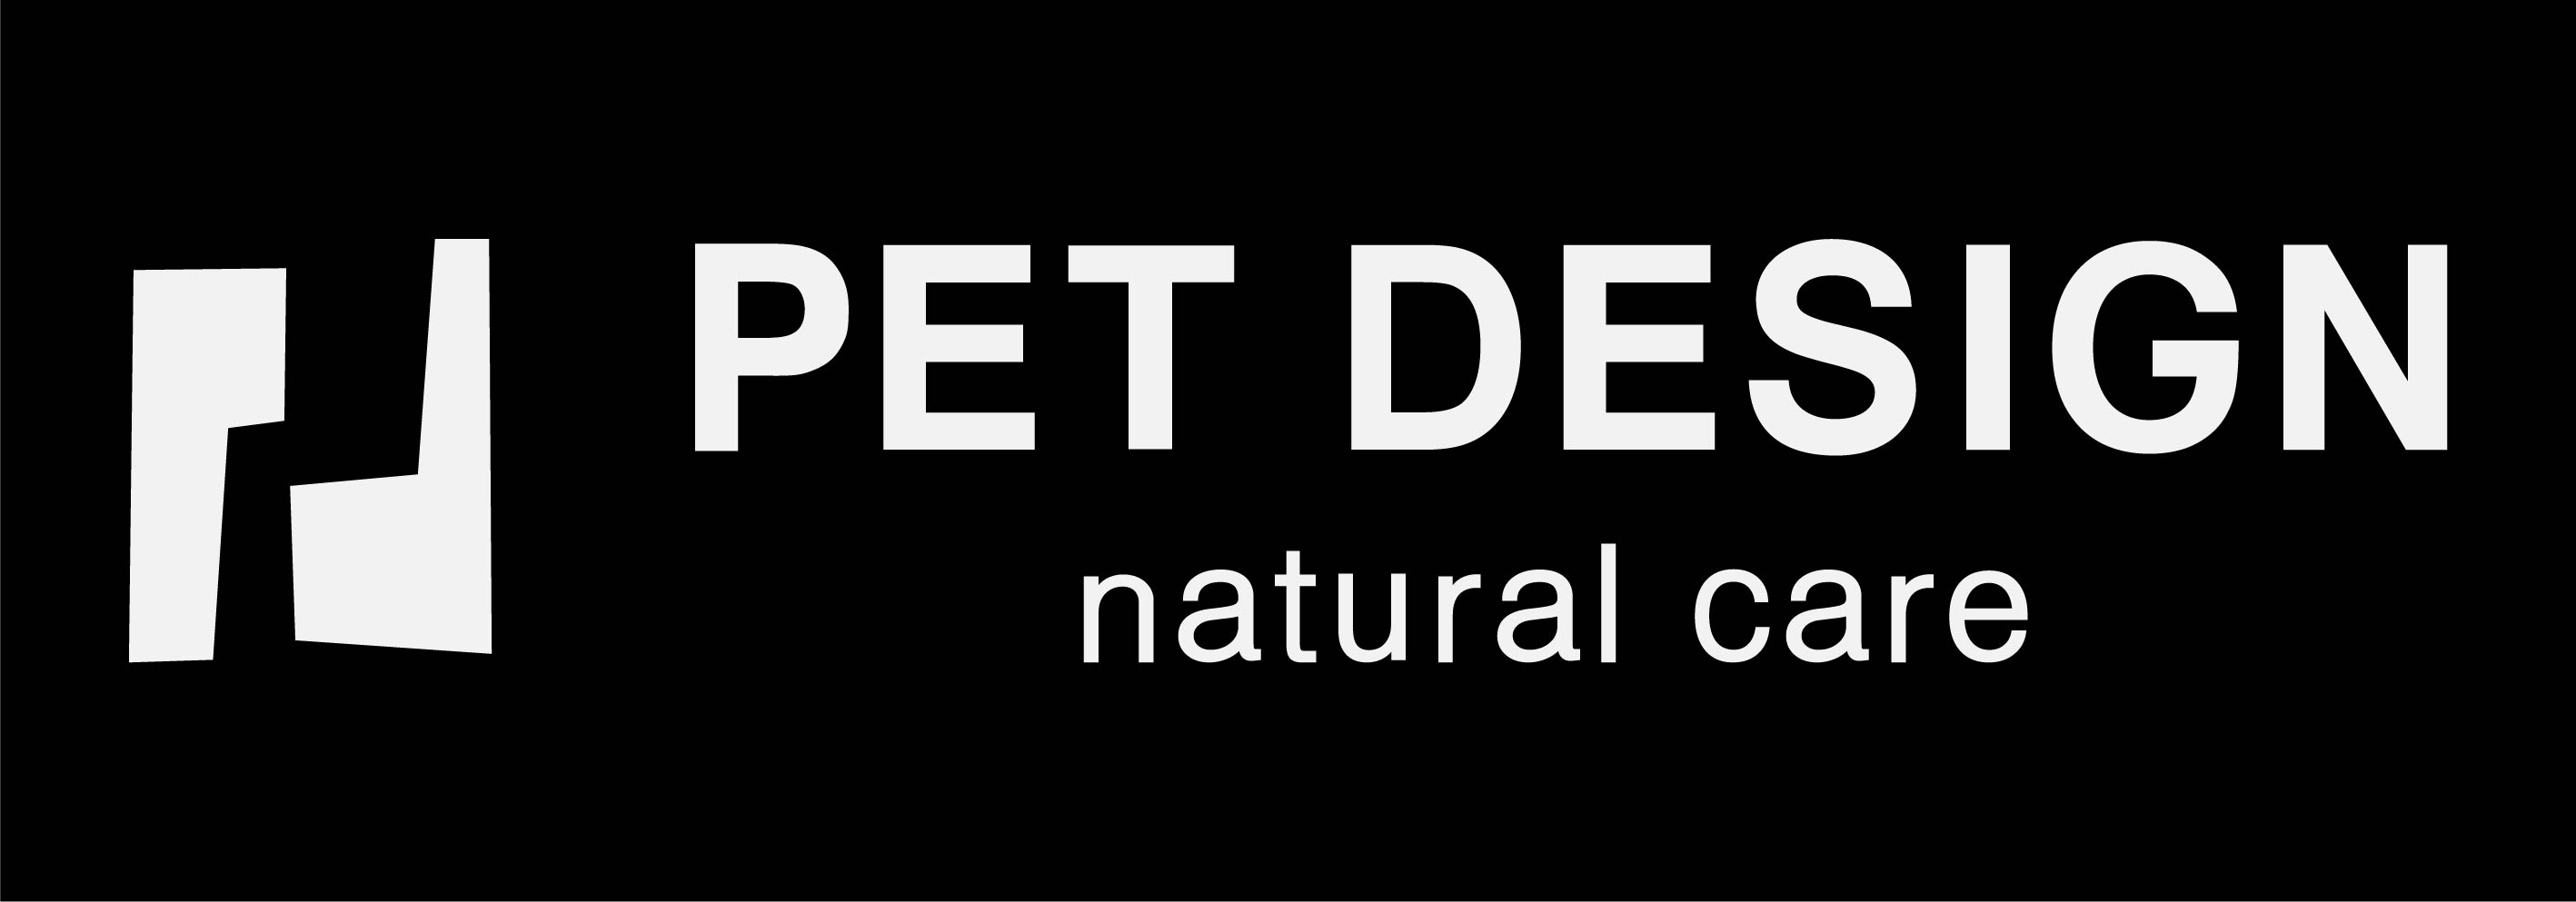 PET DESIGN natural careのロゴ画像